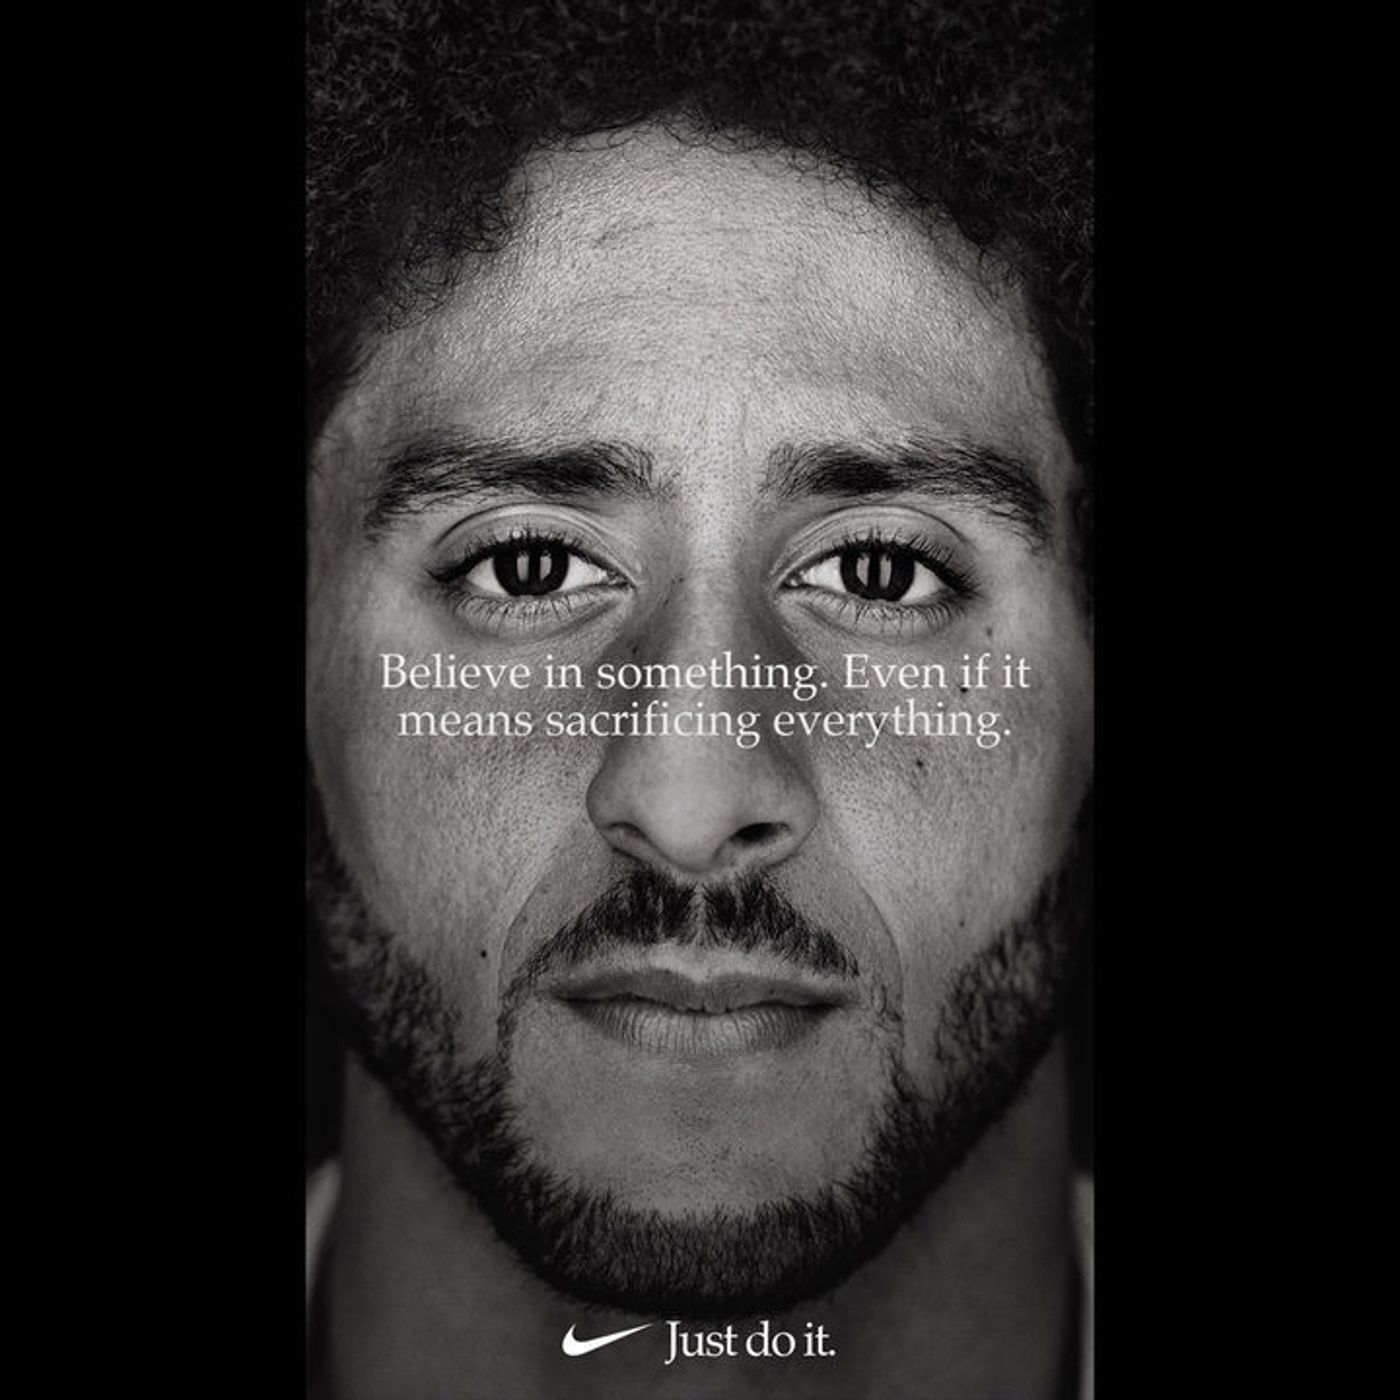 Nike shoes burned over Colin Kaepernick's "Just Do It" ad